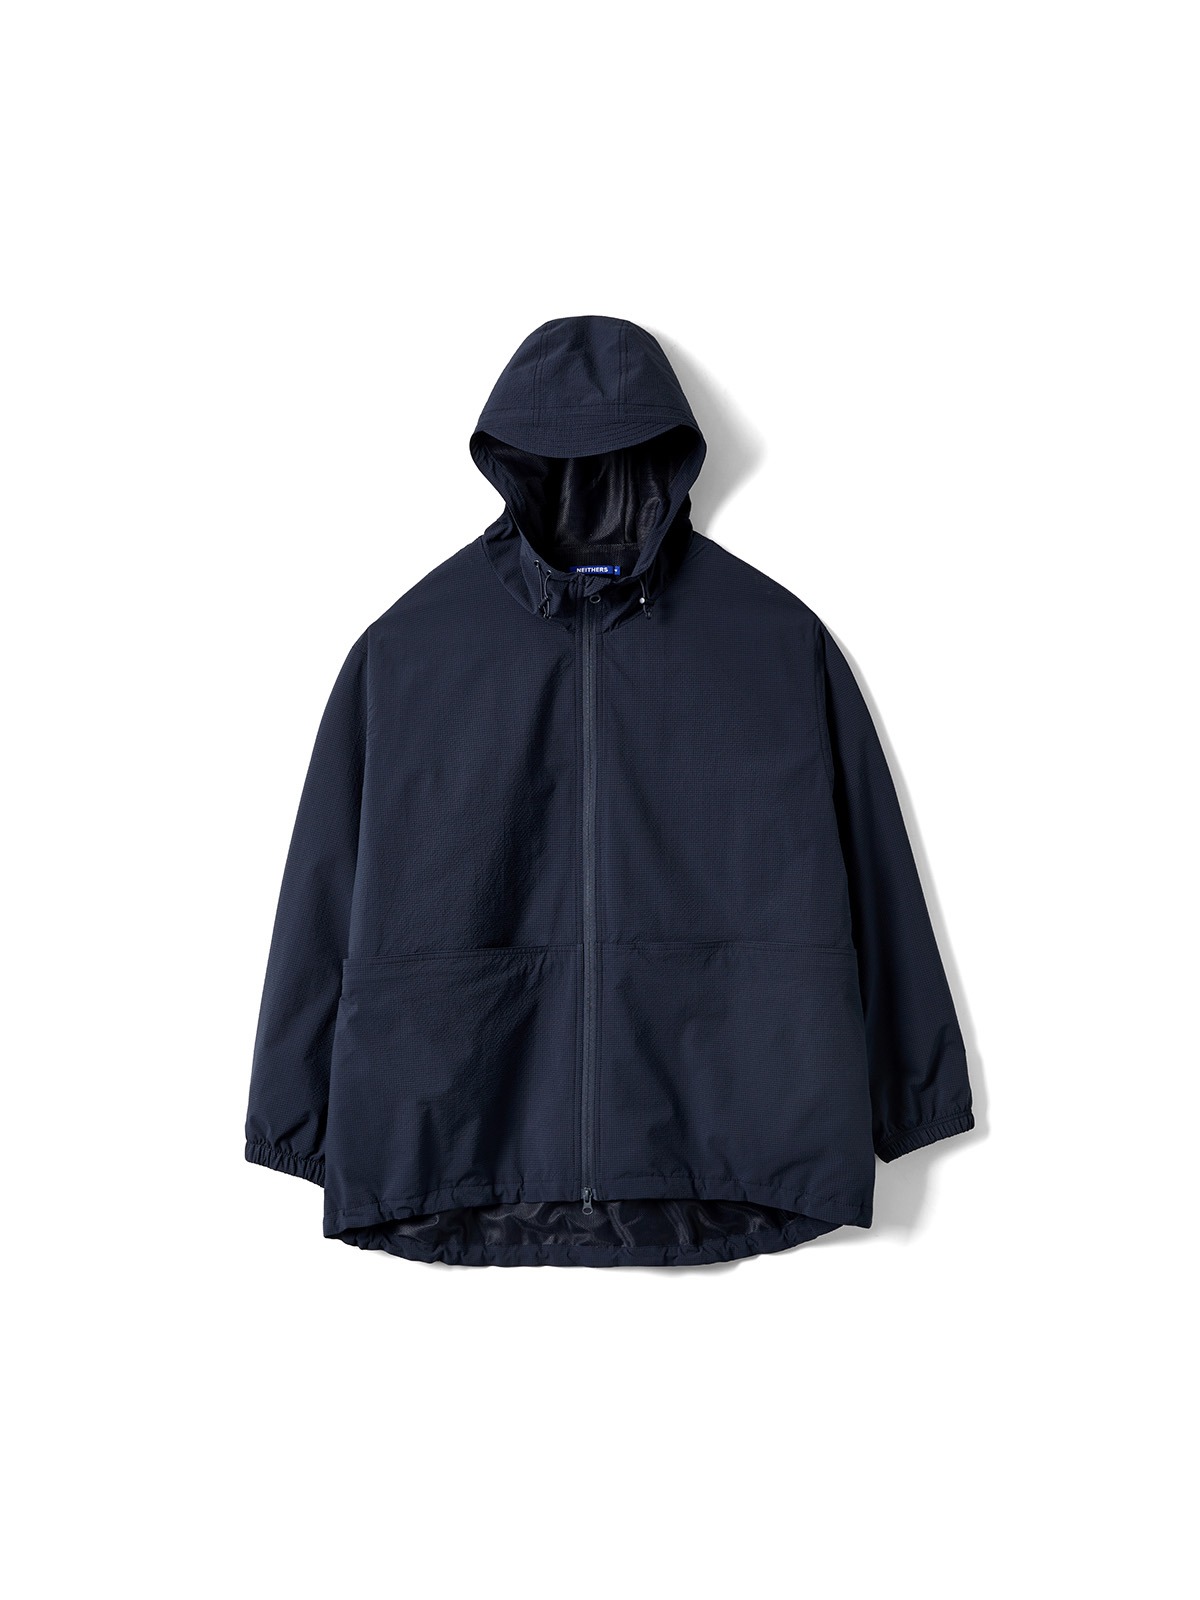 Camper Hooded Jacket (Dark Navy)